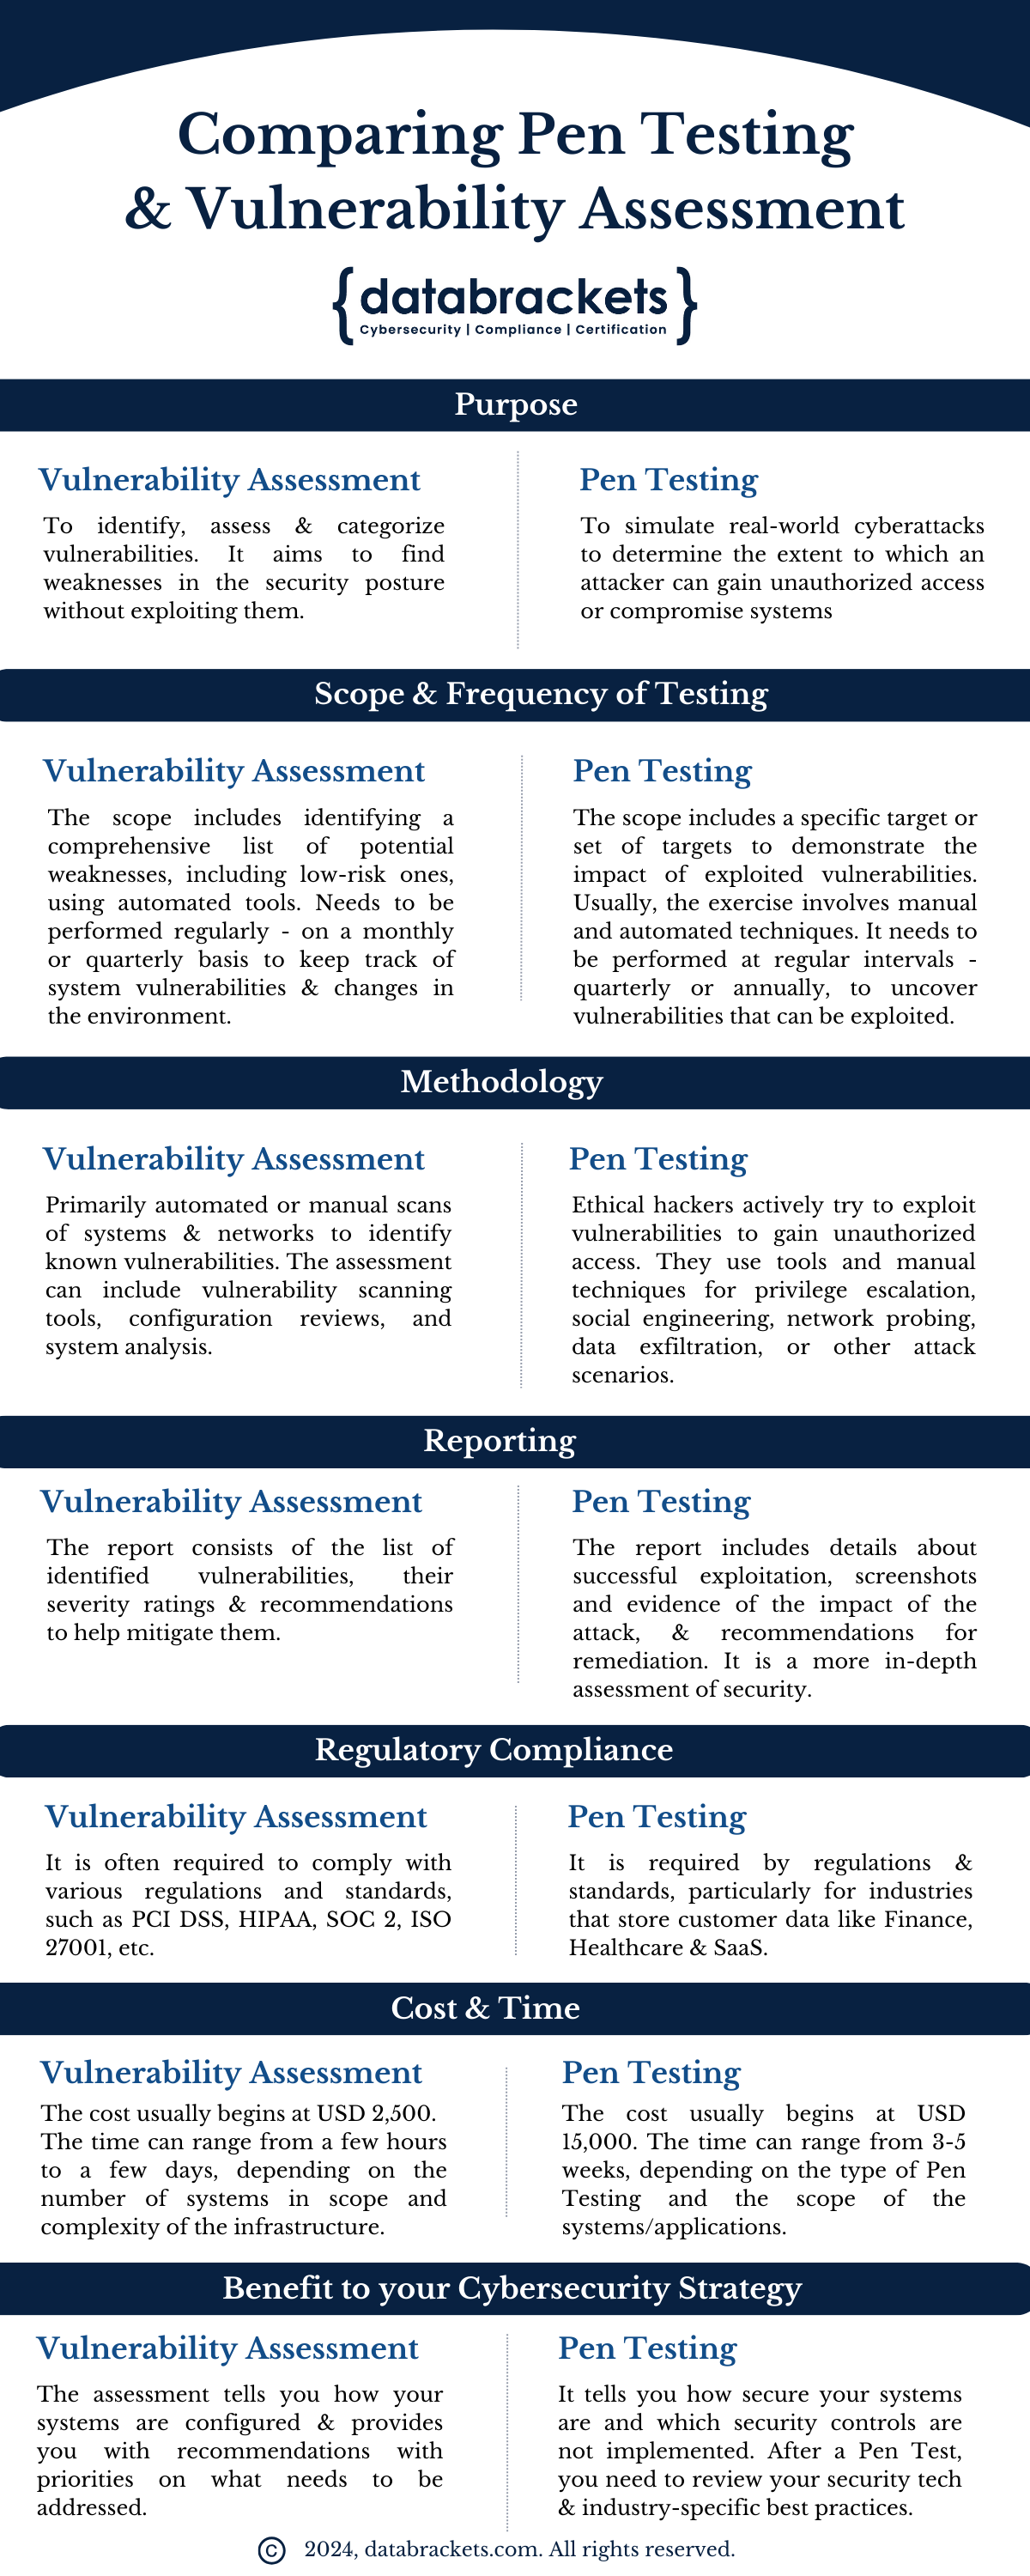 Comparing Pen Testing & Vulnerability Assessment